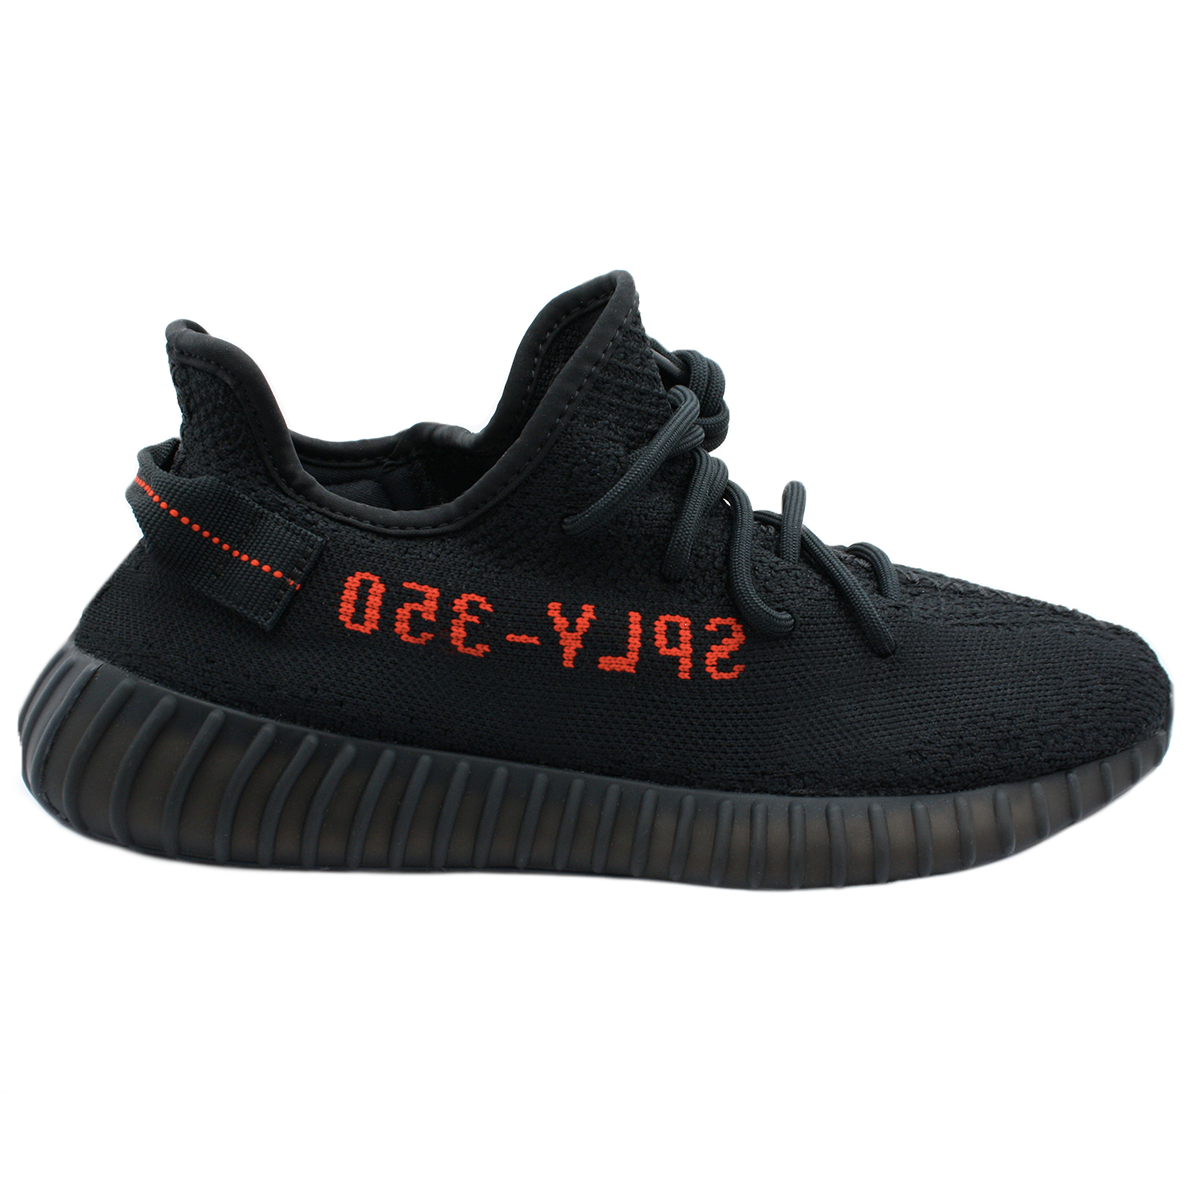 Sneakers Yeezy Boost 350 V2 Black Red YEEZY : Evok Shop